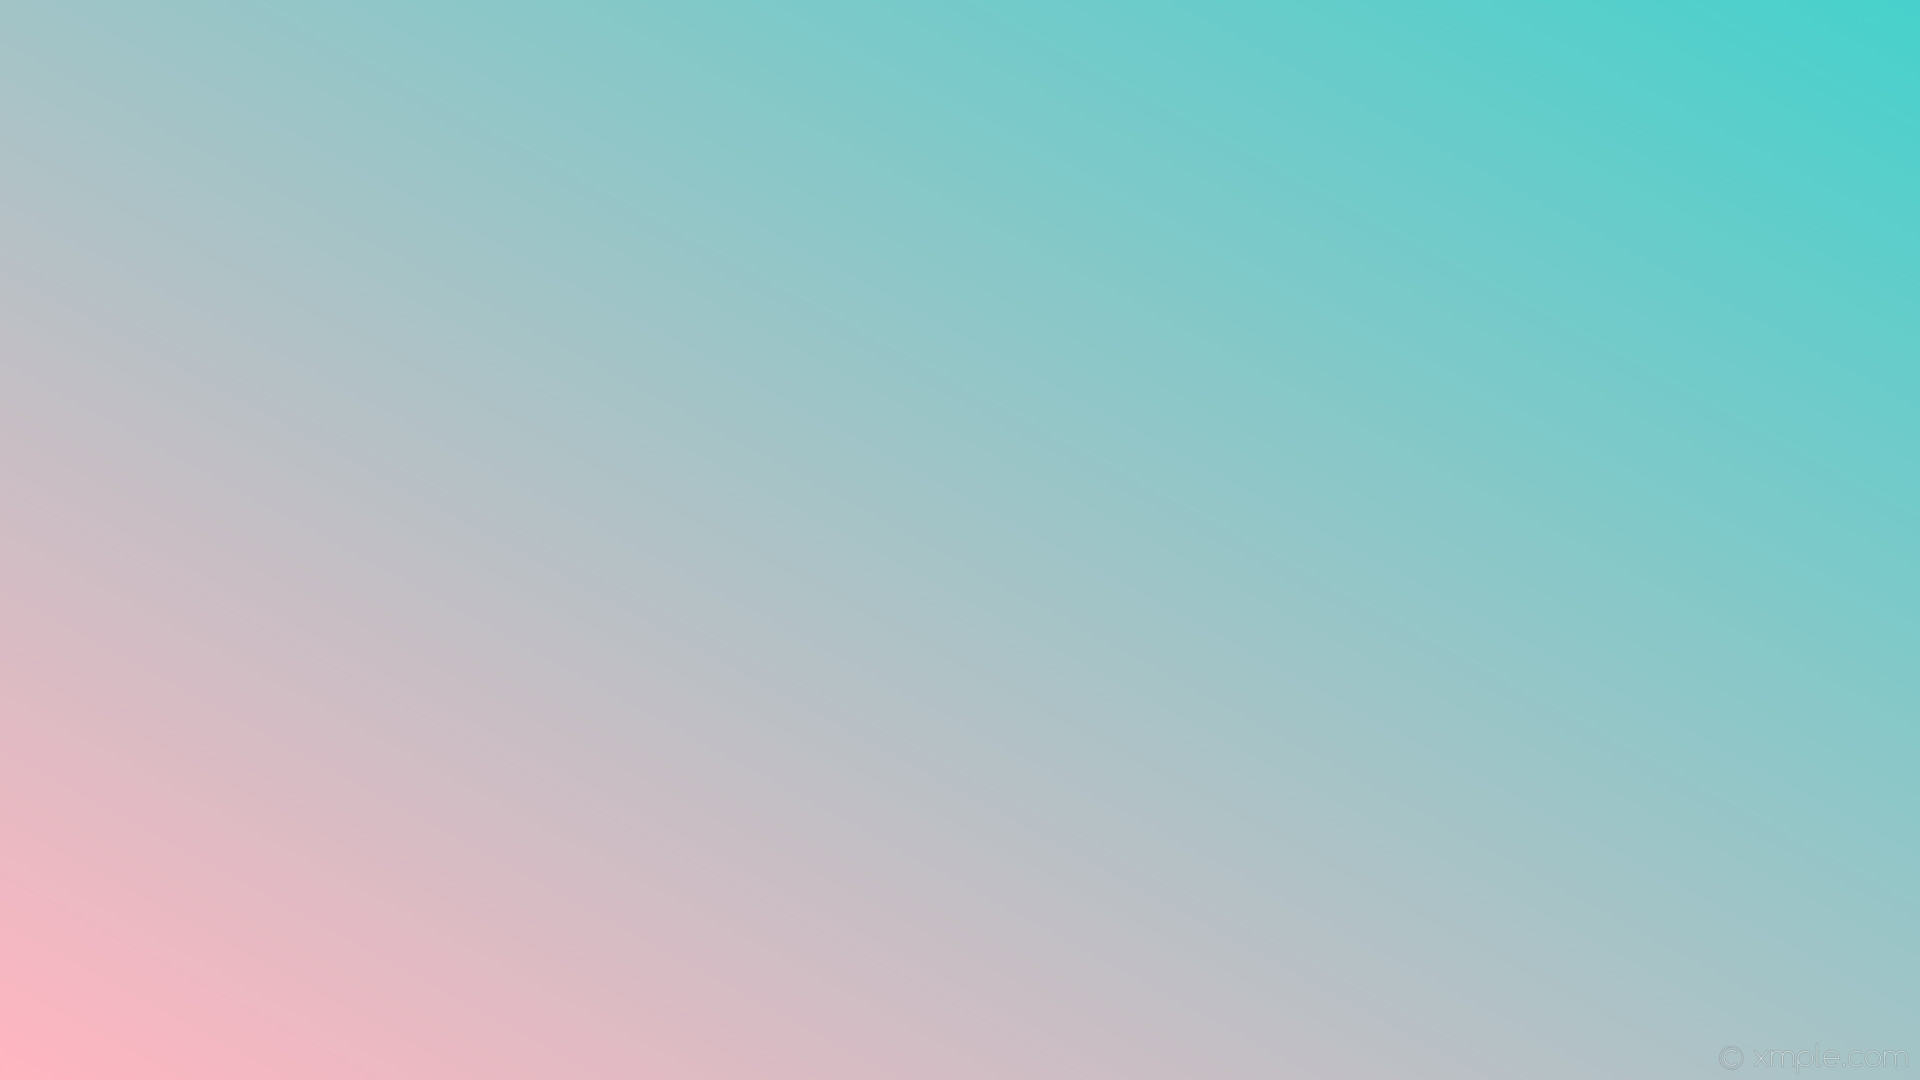 1920x1080 wallpaper blue pink gradient linear light pink medium turquoise #ffb6c1  #48d1cc 210Â°